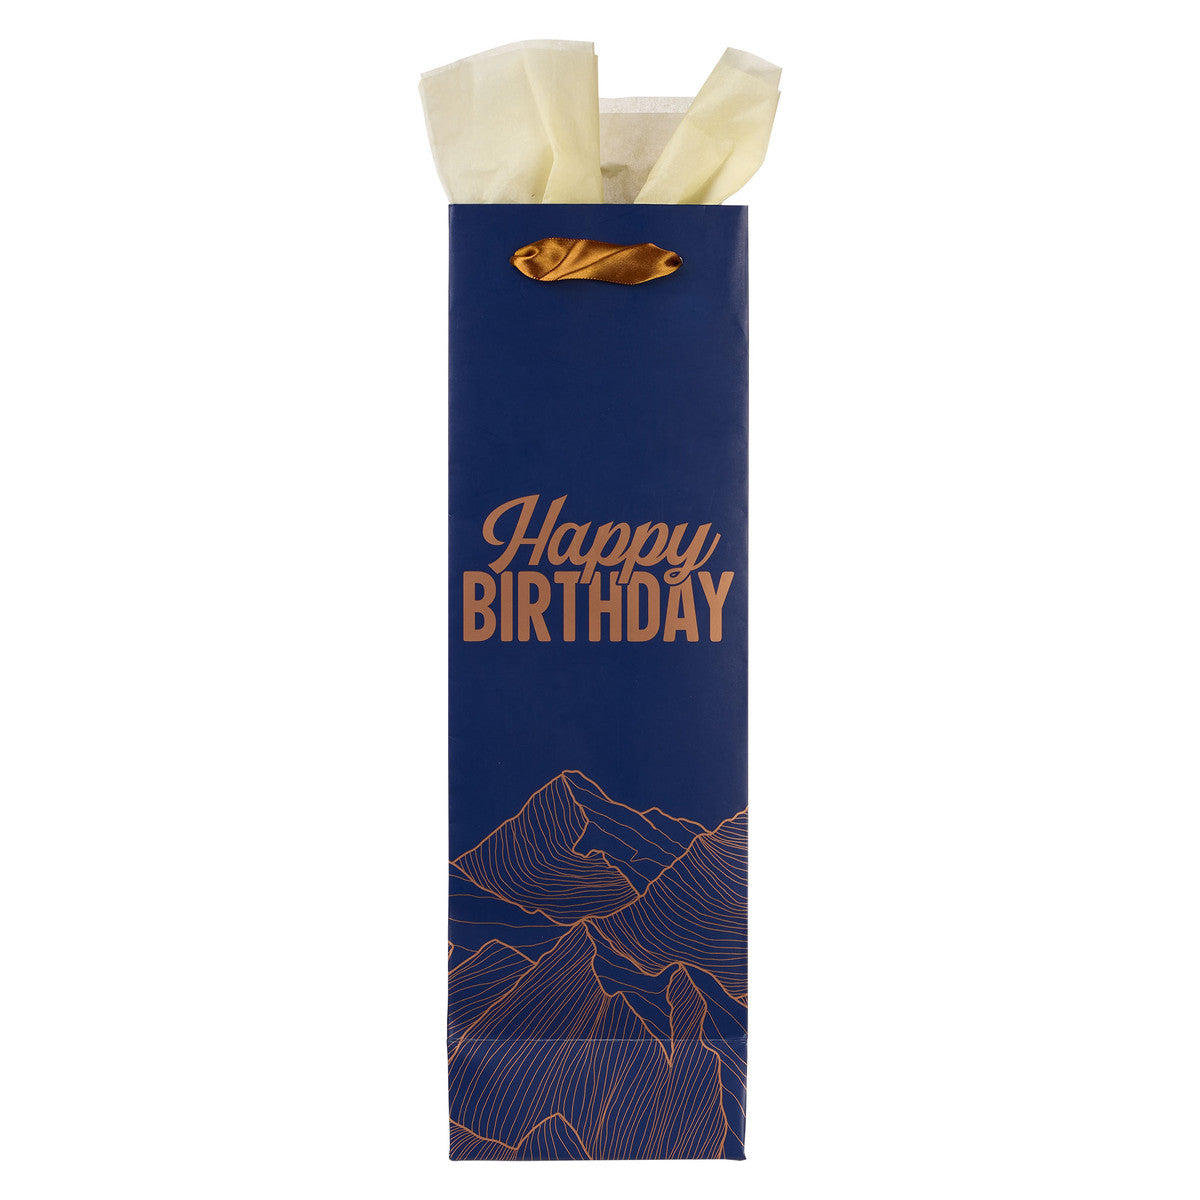 Happy Birthday Blue Sunset Bottle Gift Bag - The Christian Gift Company